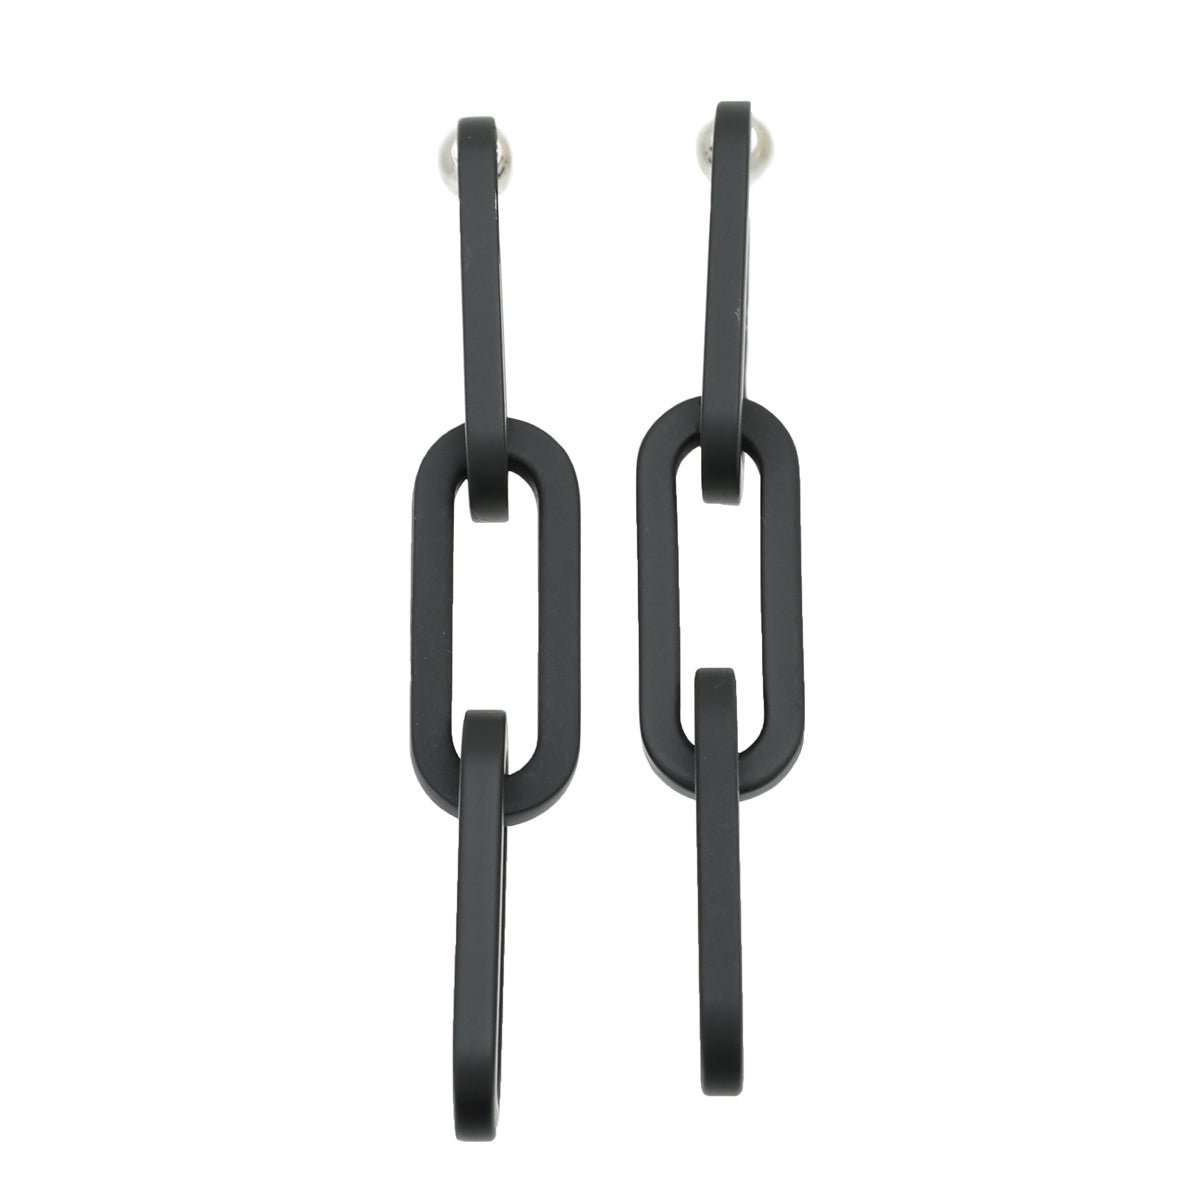 Burberry - Burberry Black 3x3 Link Chain Earrings | The Closet